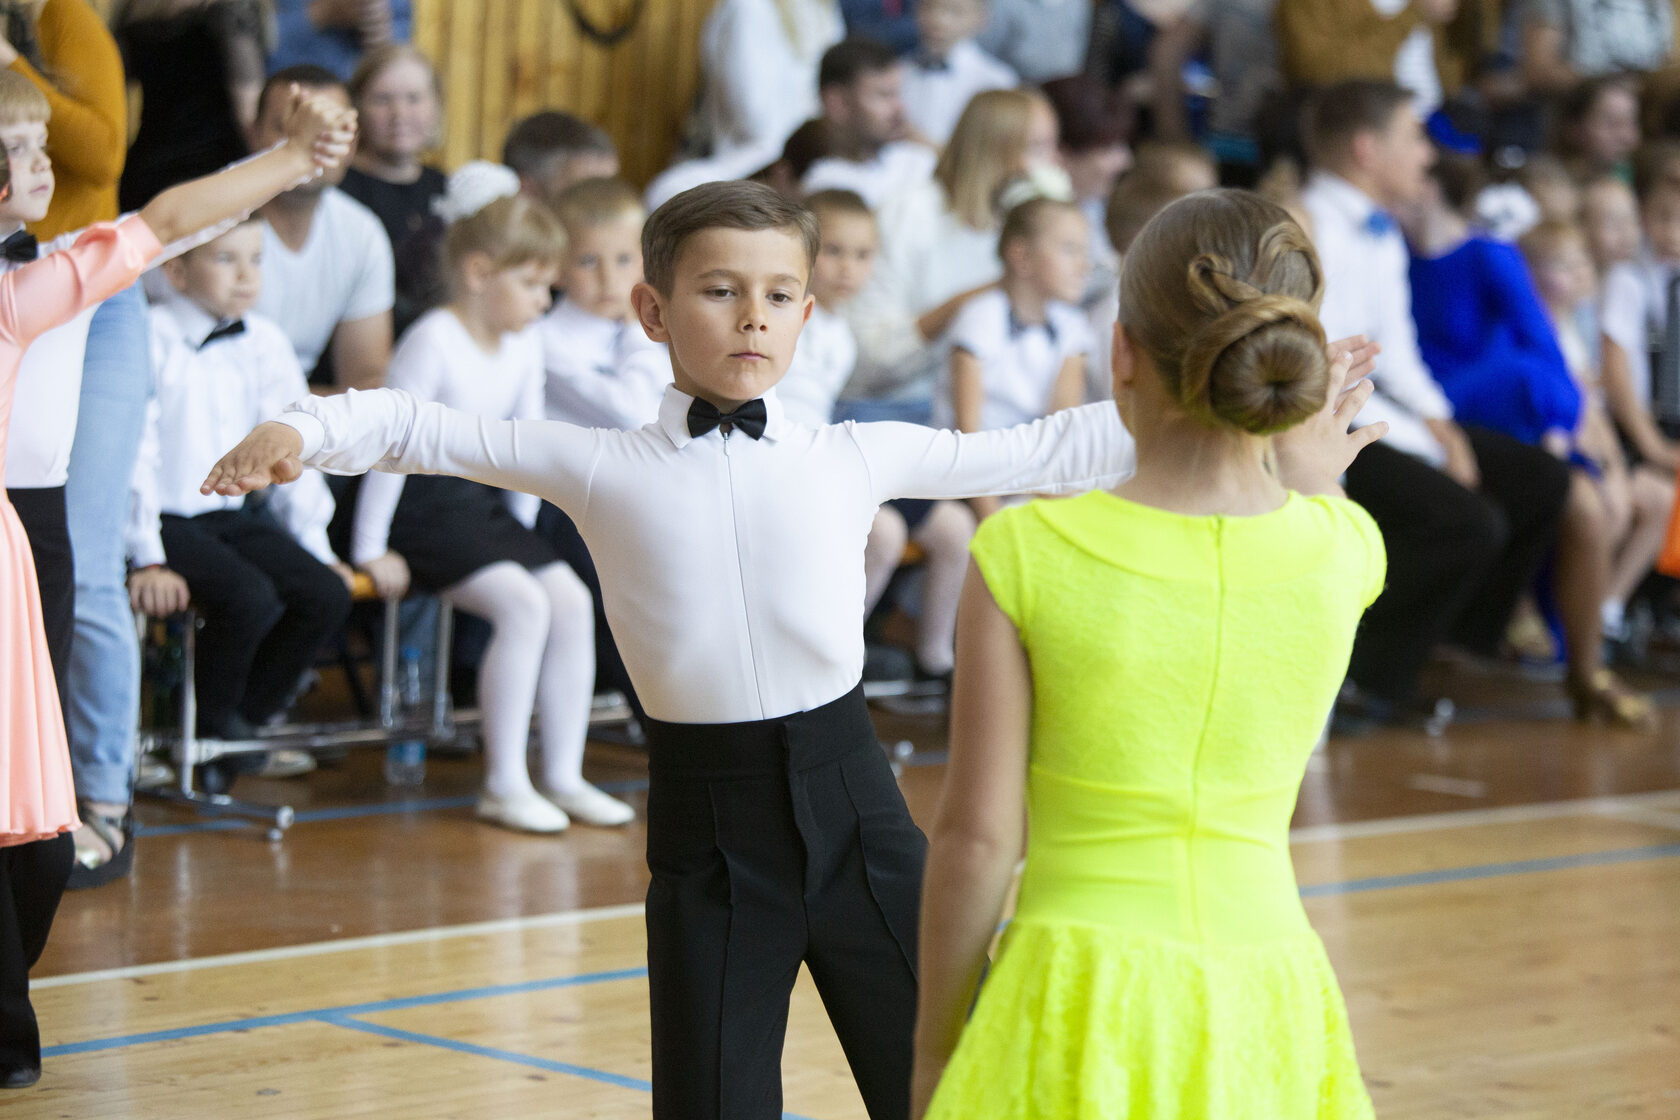 Sveta Dance Fashion | Платья для бальных танцев